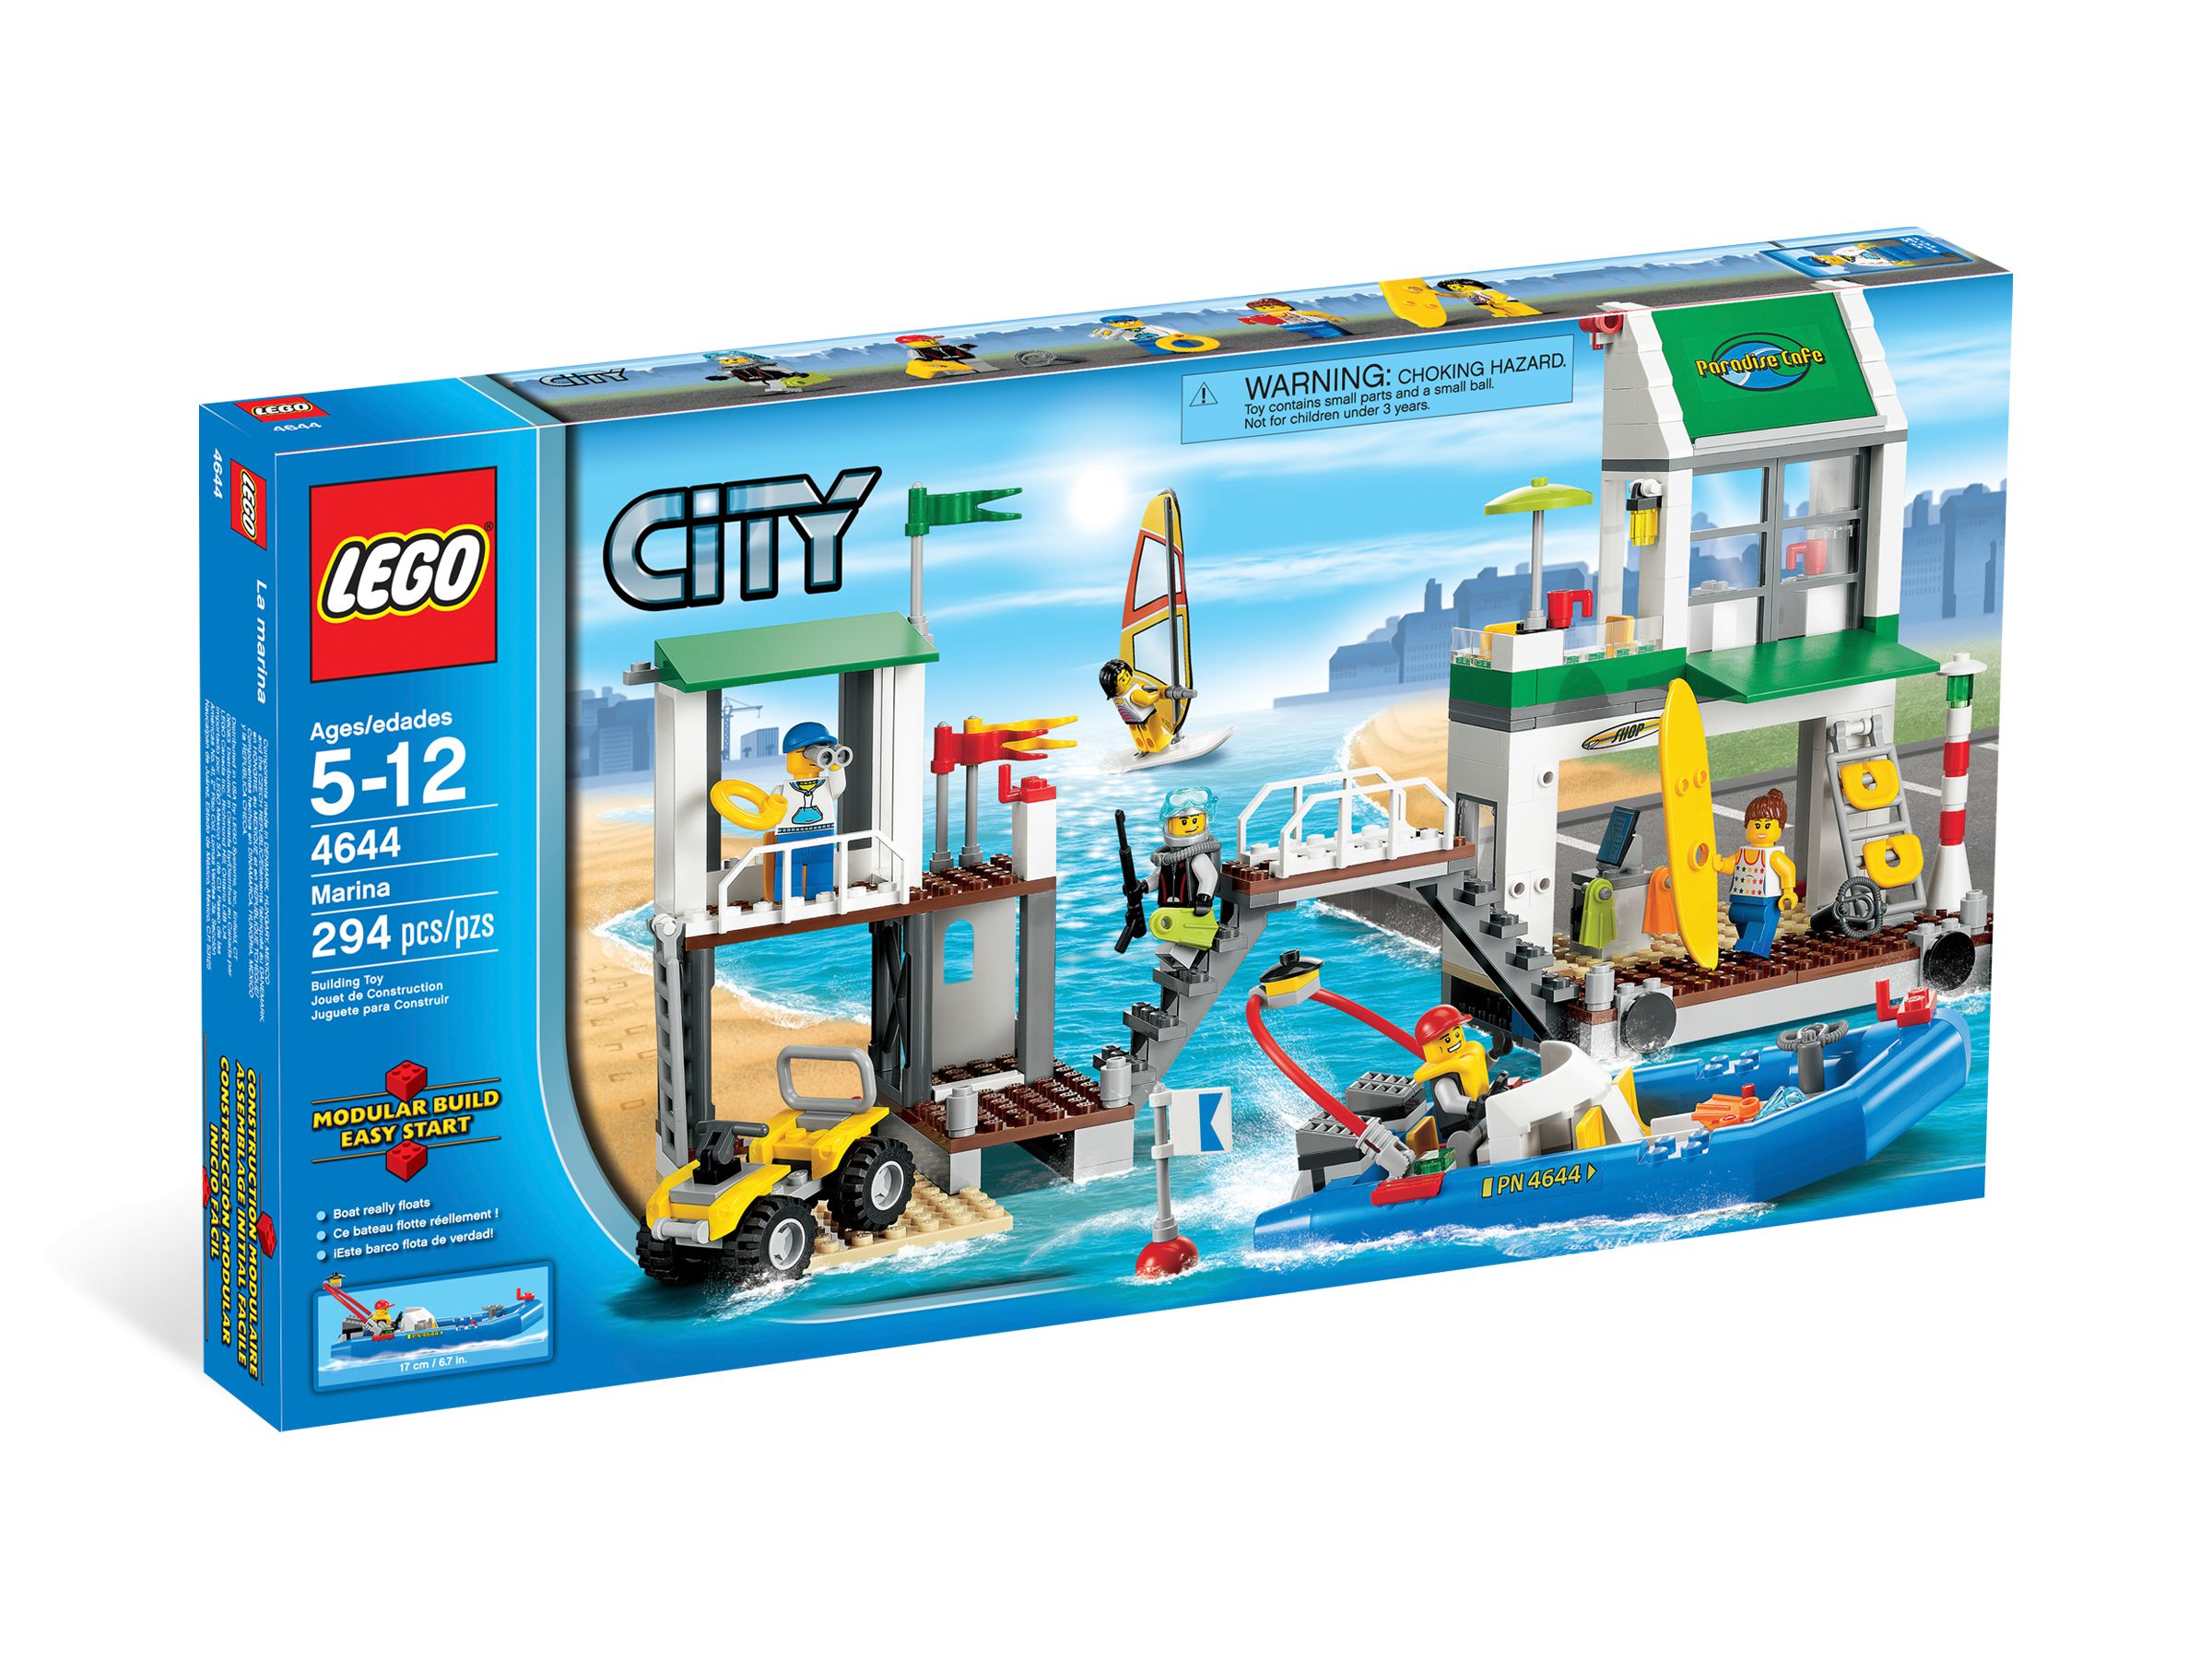 LEGO City 4644 Strandpromenade LEGO_4644_alt1.jpg